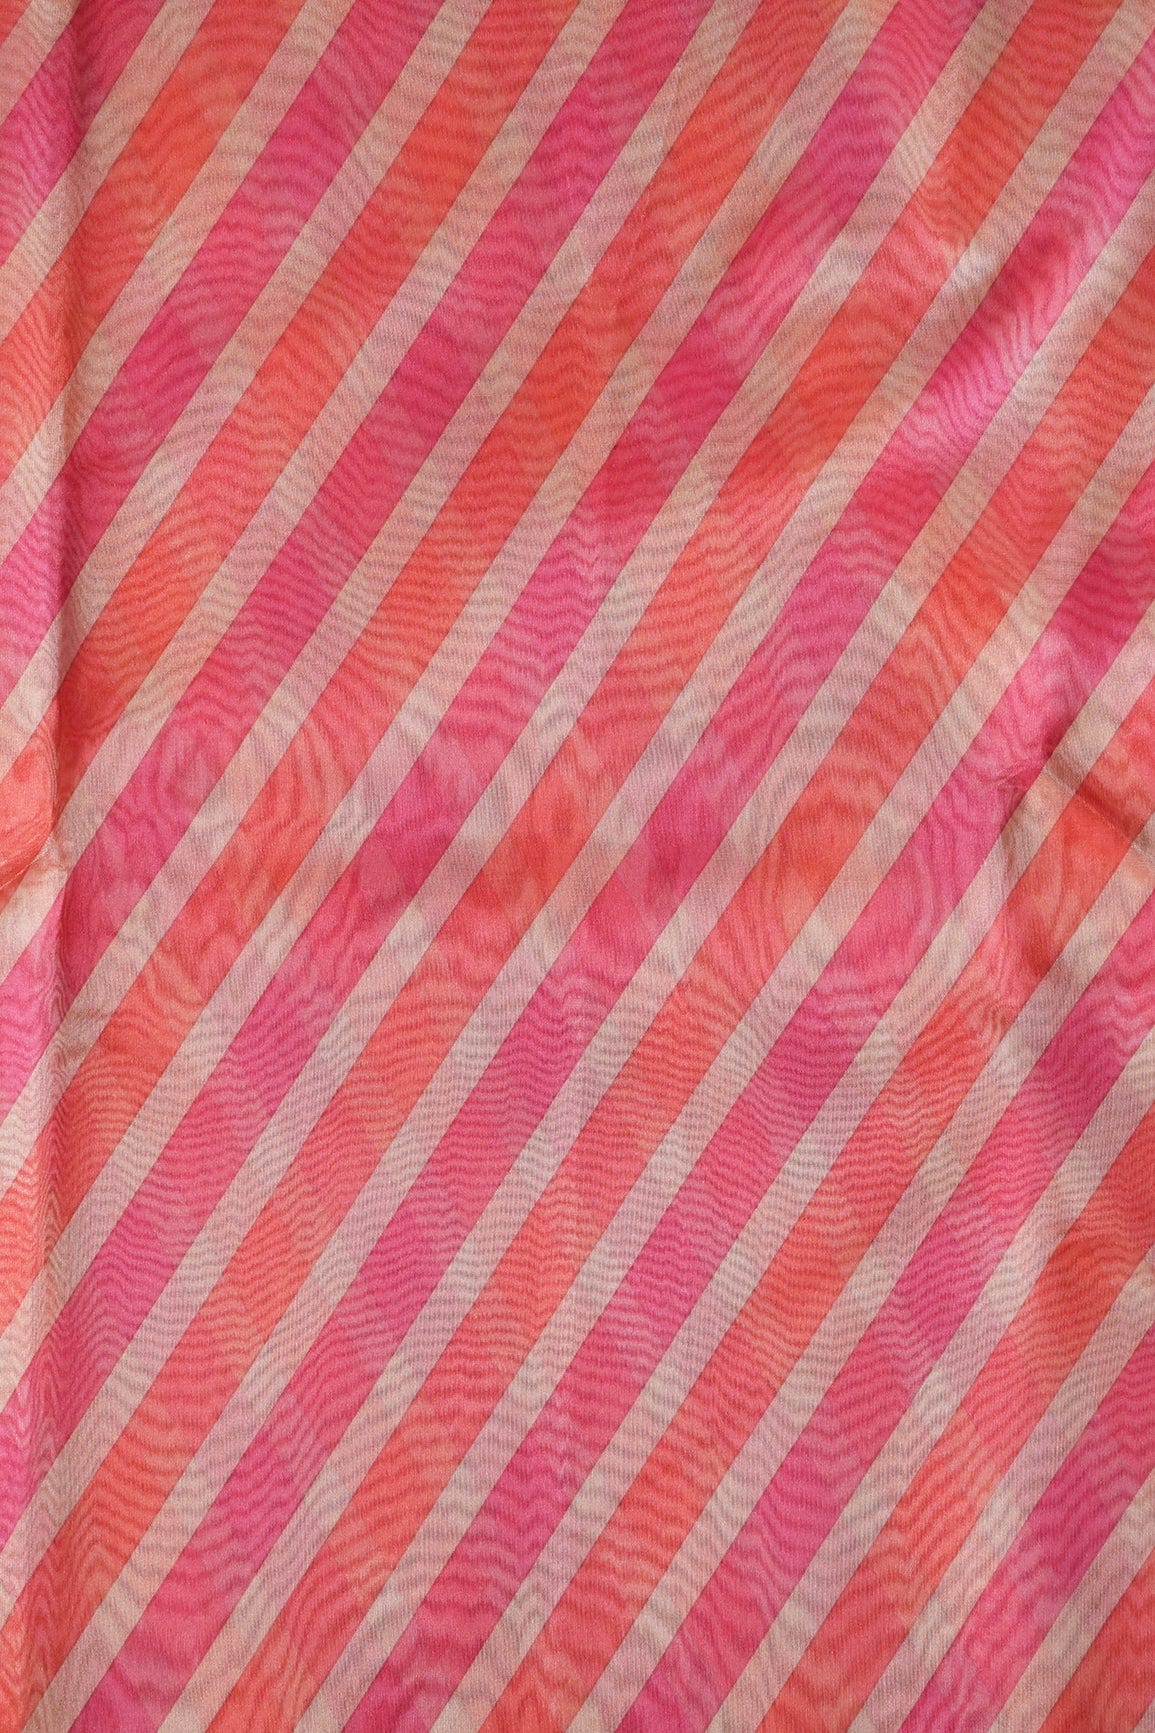 doeraa Prints Orange And Pink Stripes Digital Print On Organza Fabric